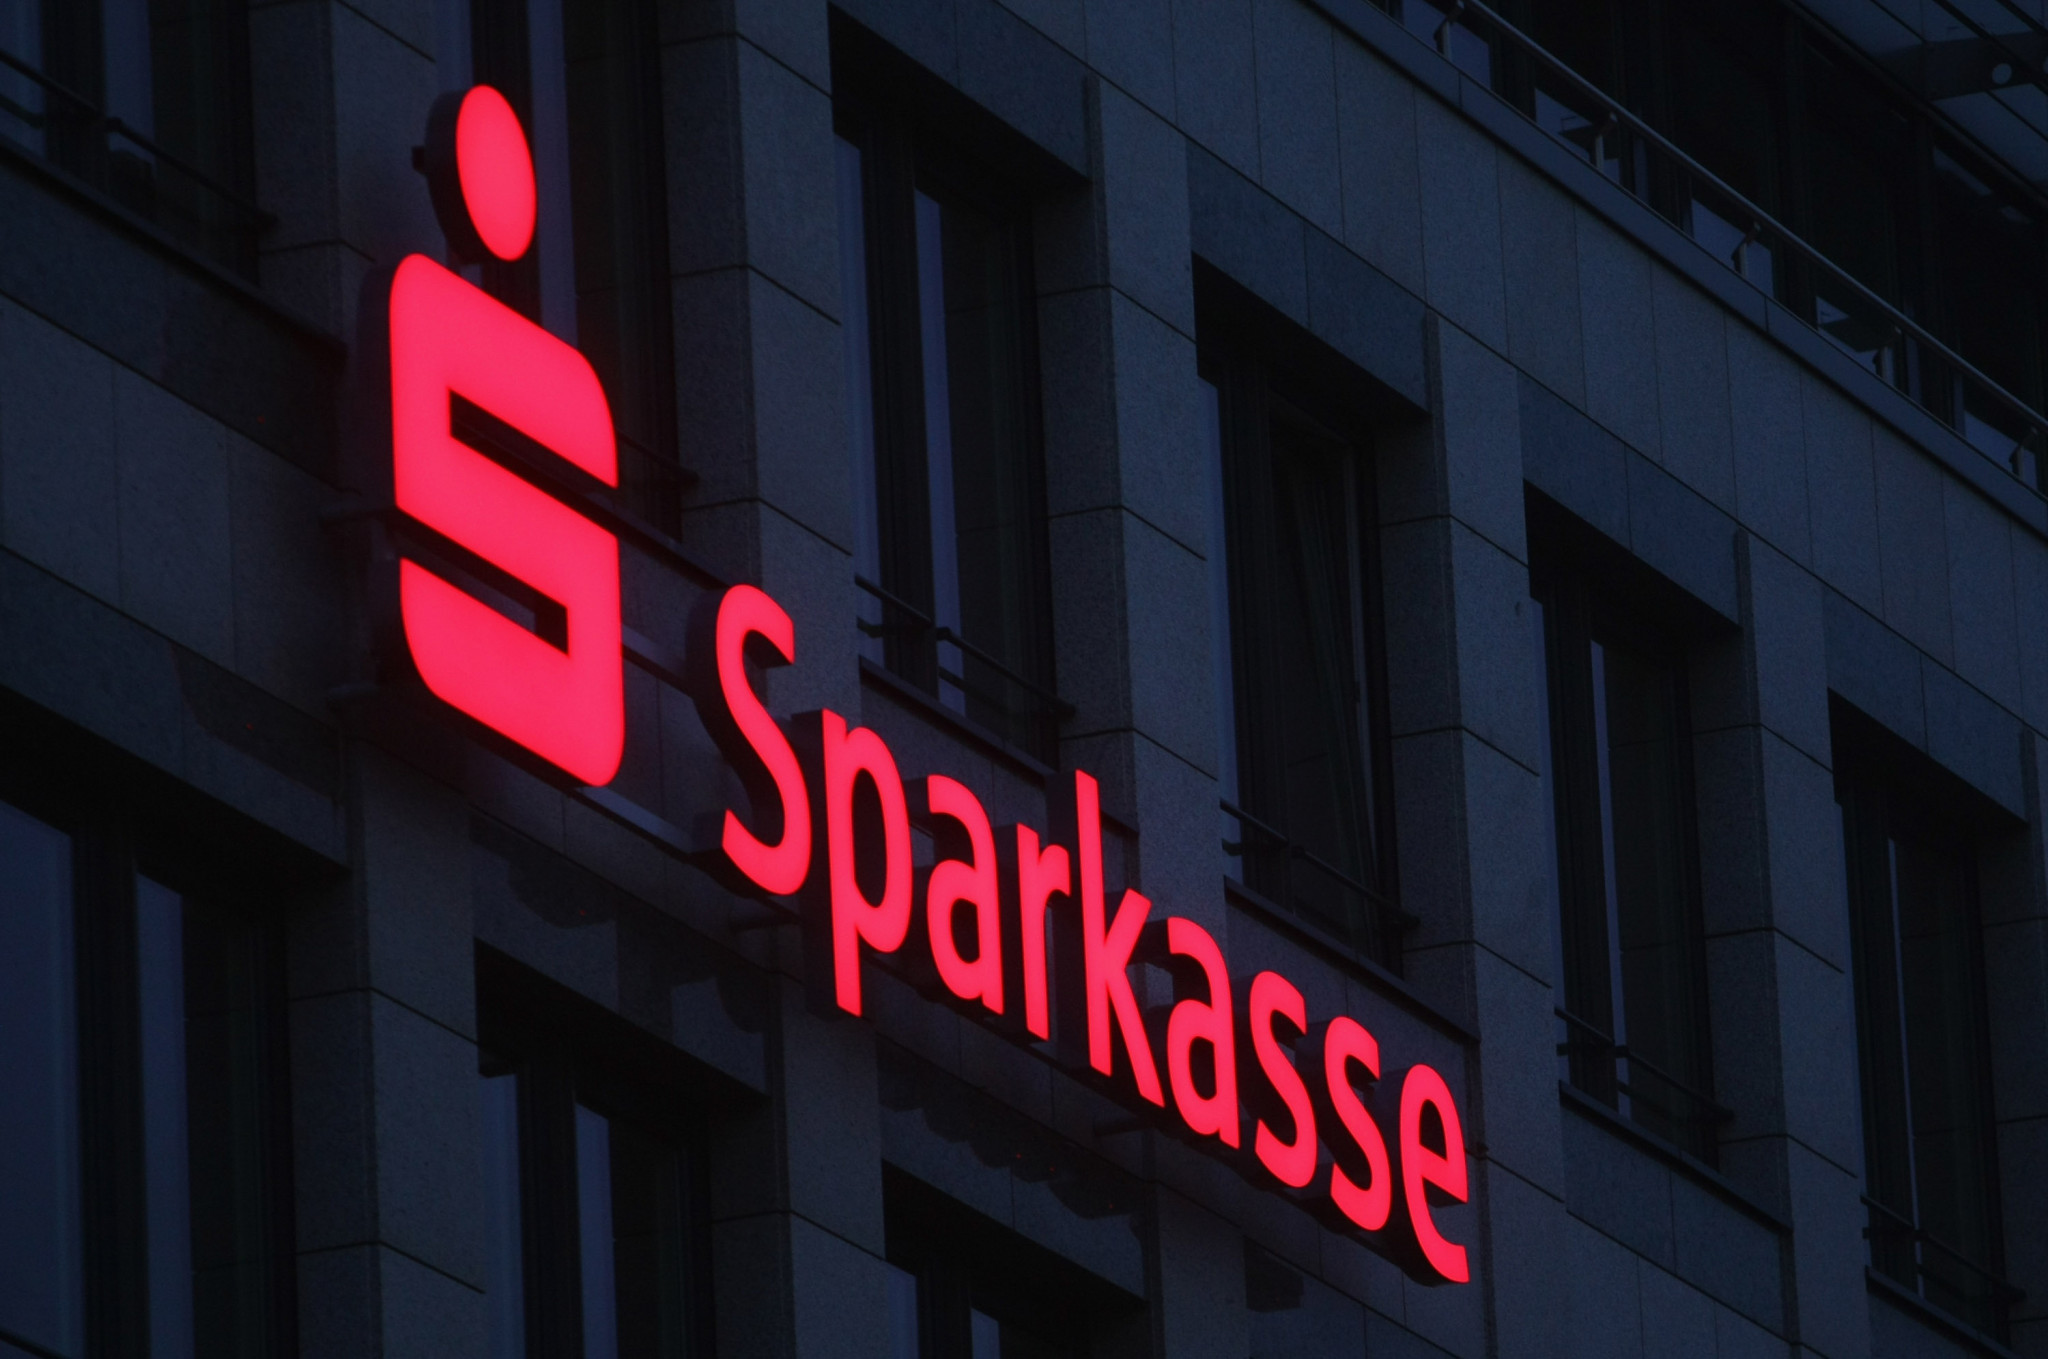 Sparkasse-Finanzgruppe becomes second Munich 2022 premier partner